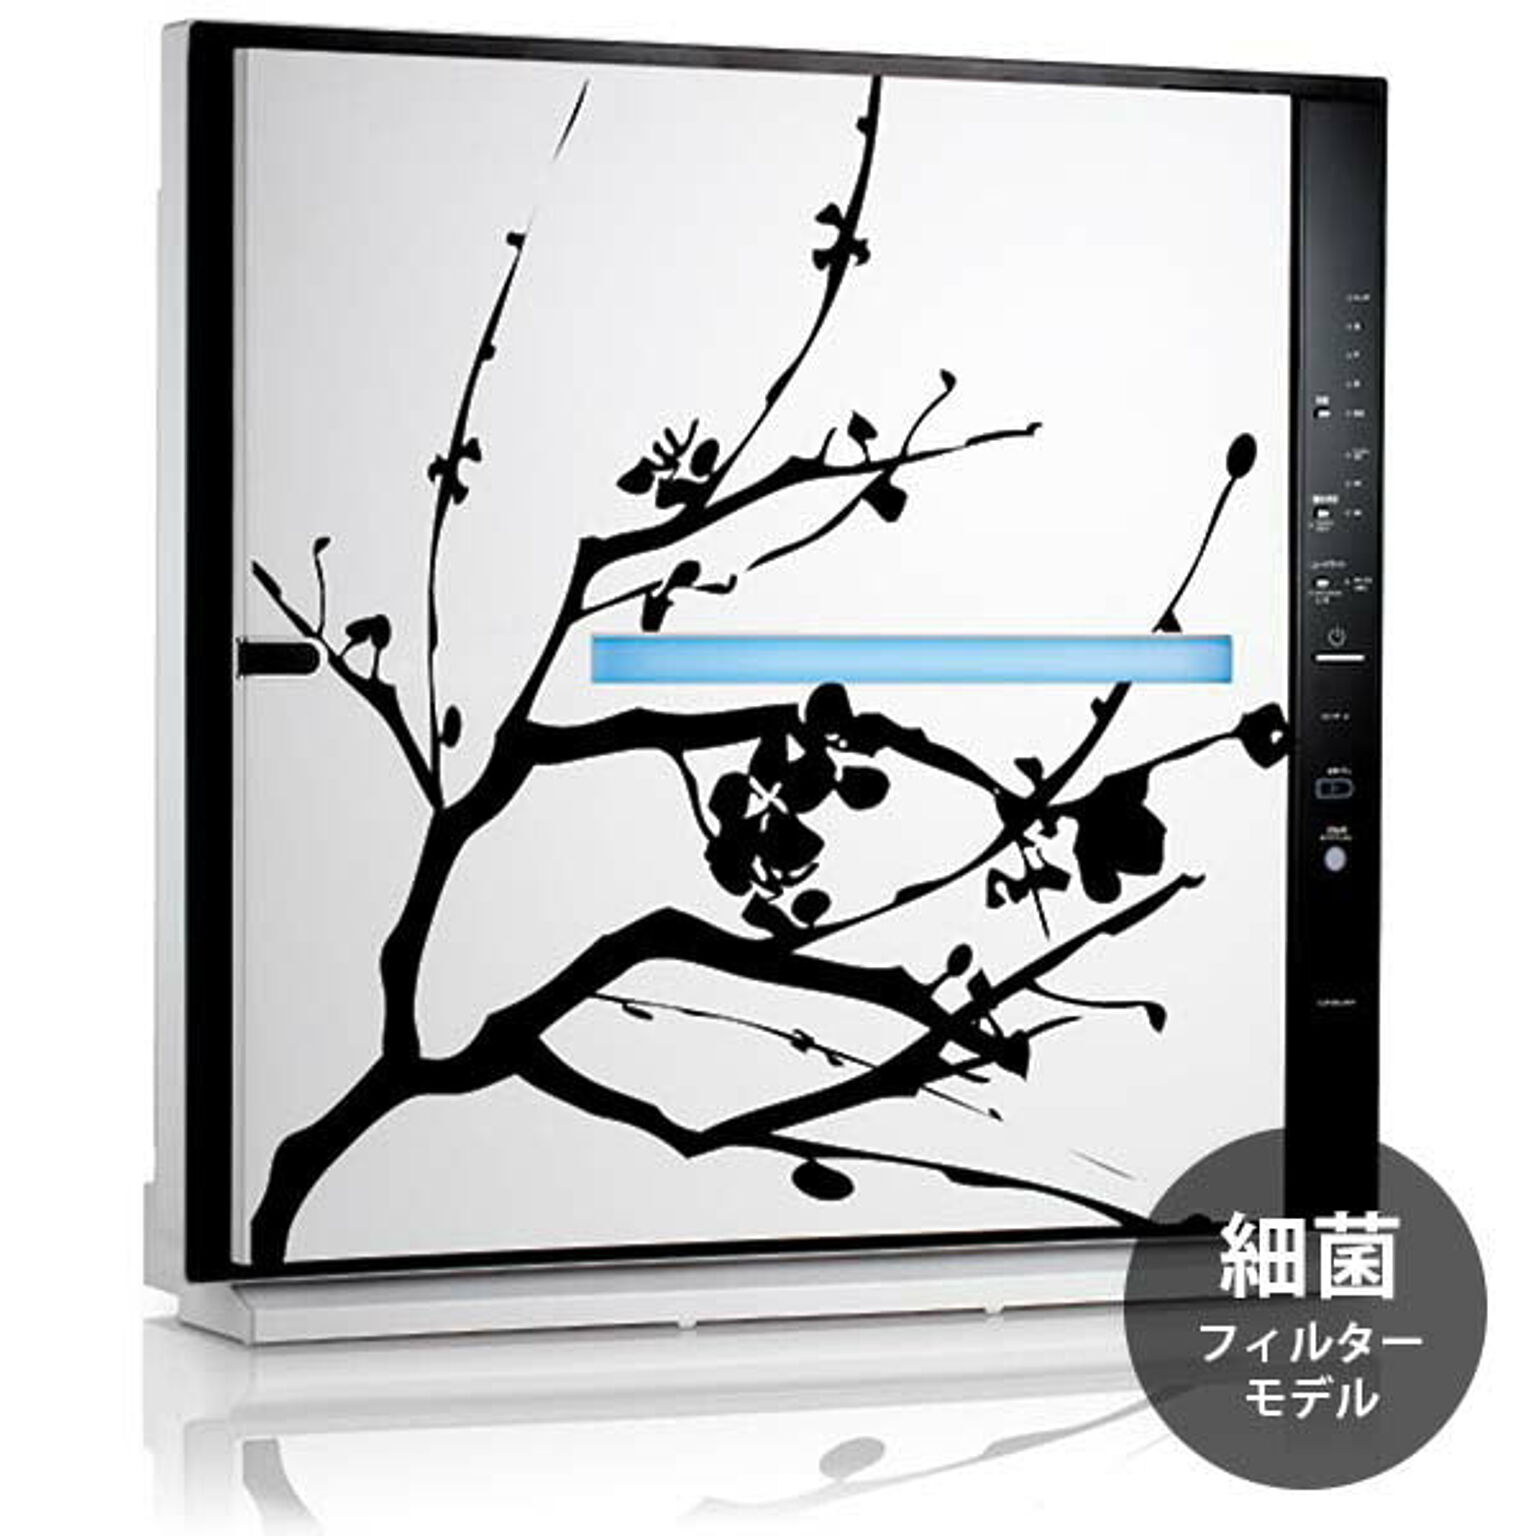 AIR PURIFIER MinusA2 WiFiモデル アーティストシリーズ「神奈川沖浪裏」SPA-780NJB GW 空気清浄機 エアクリーナー